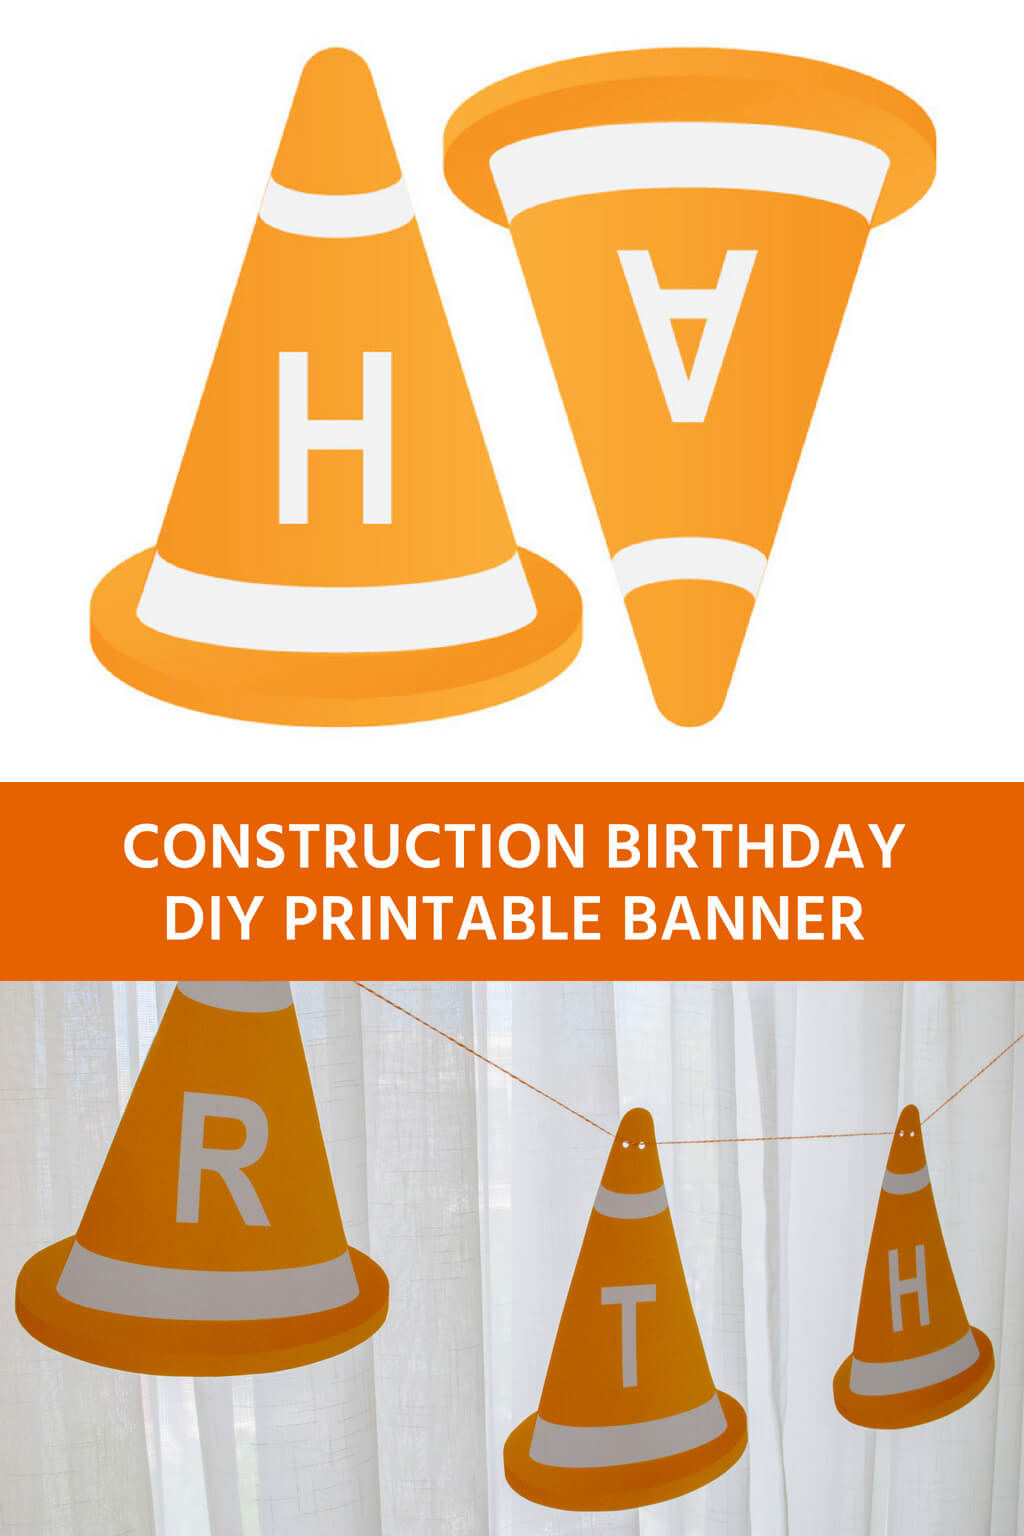 Construction birthday banner printable